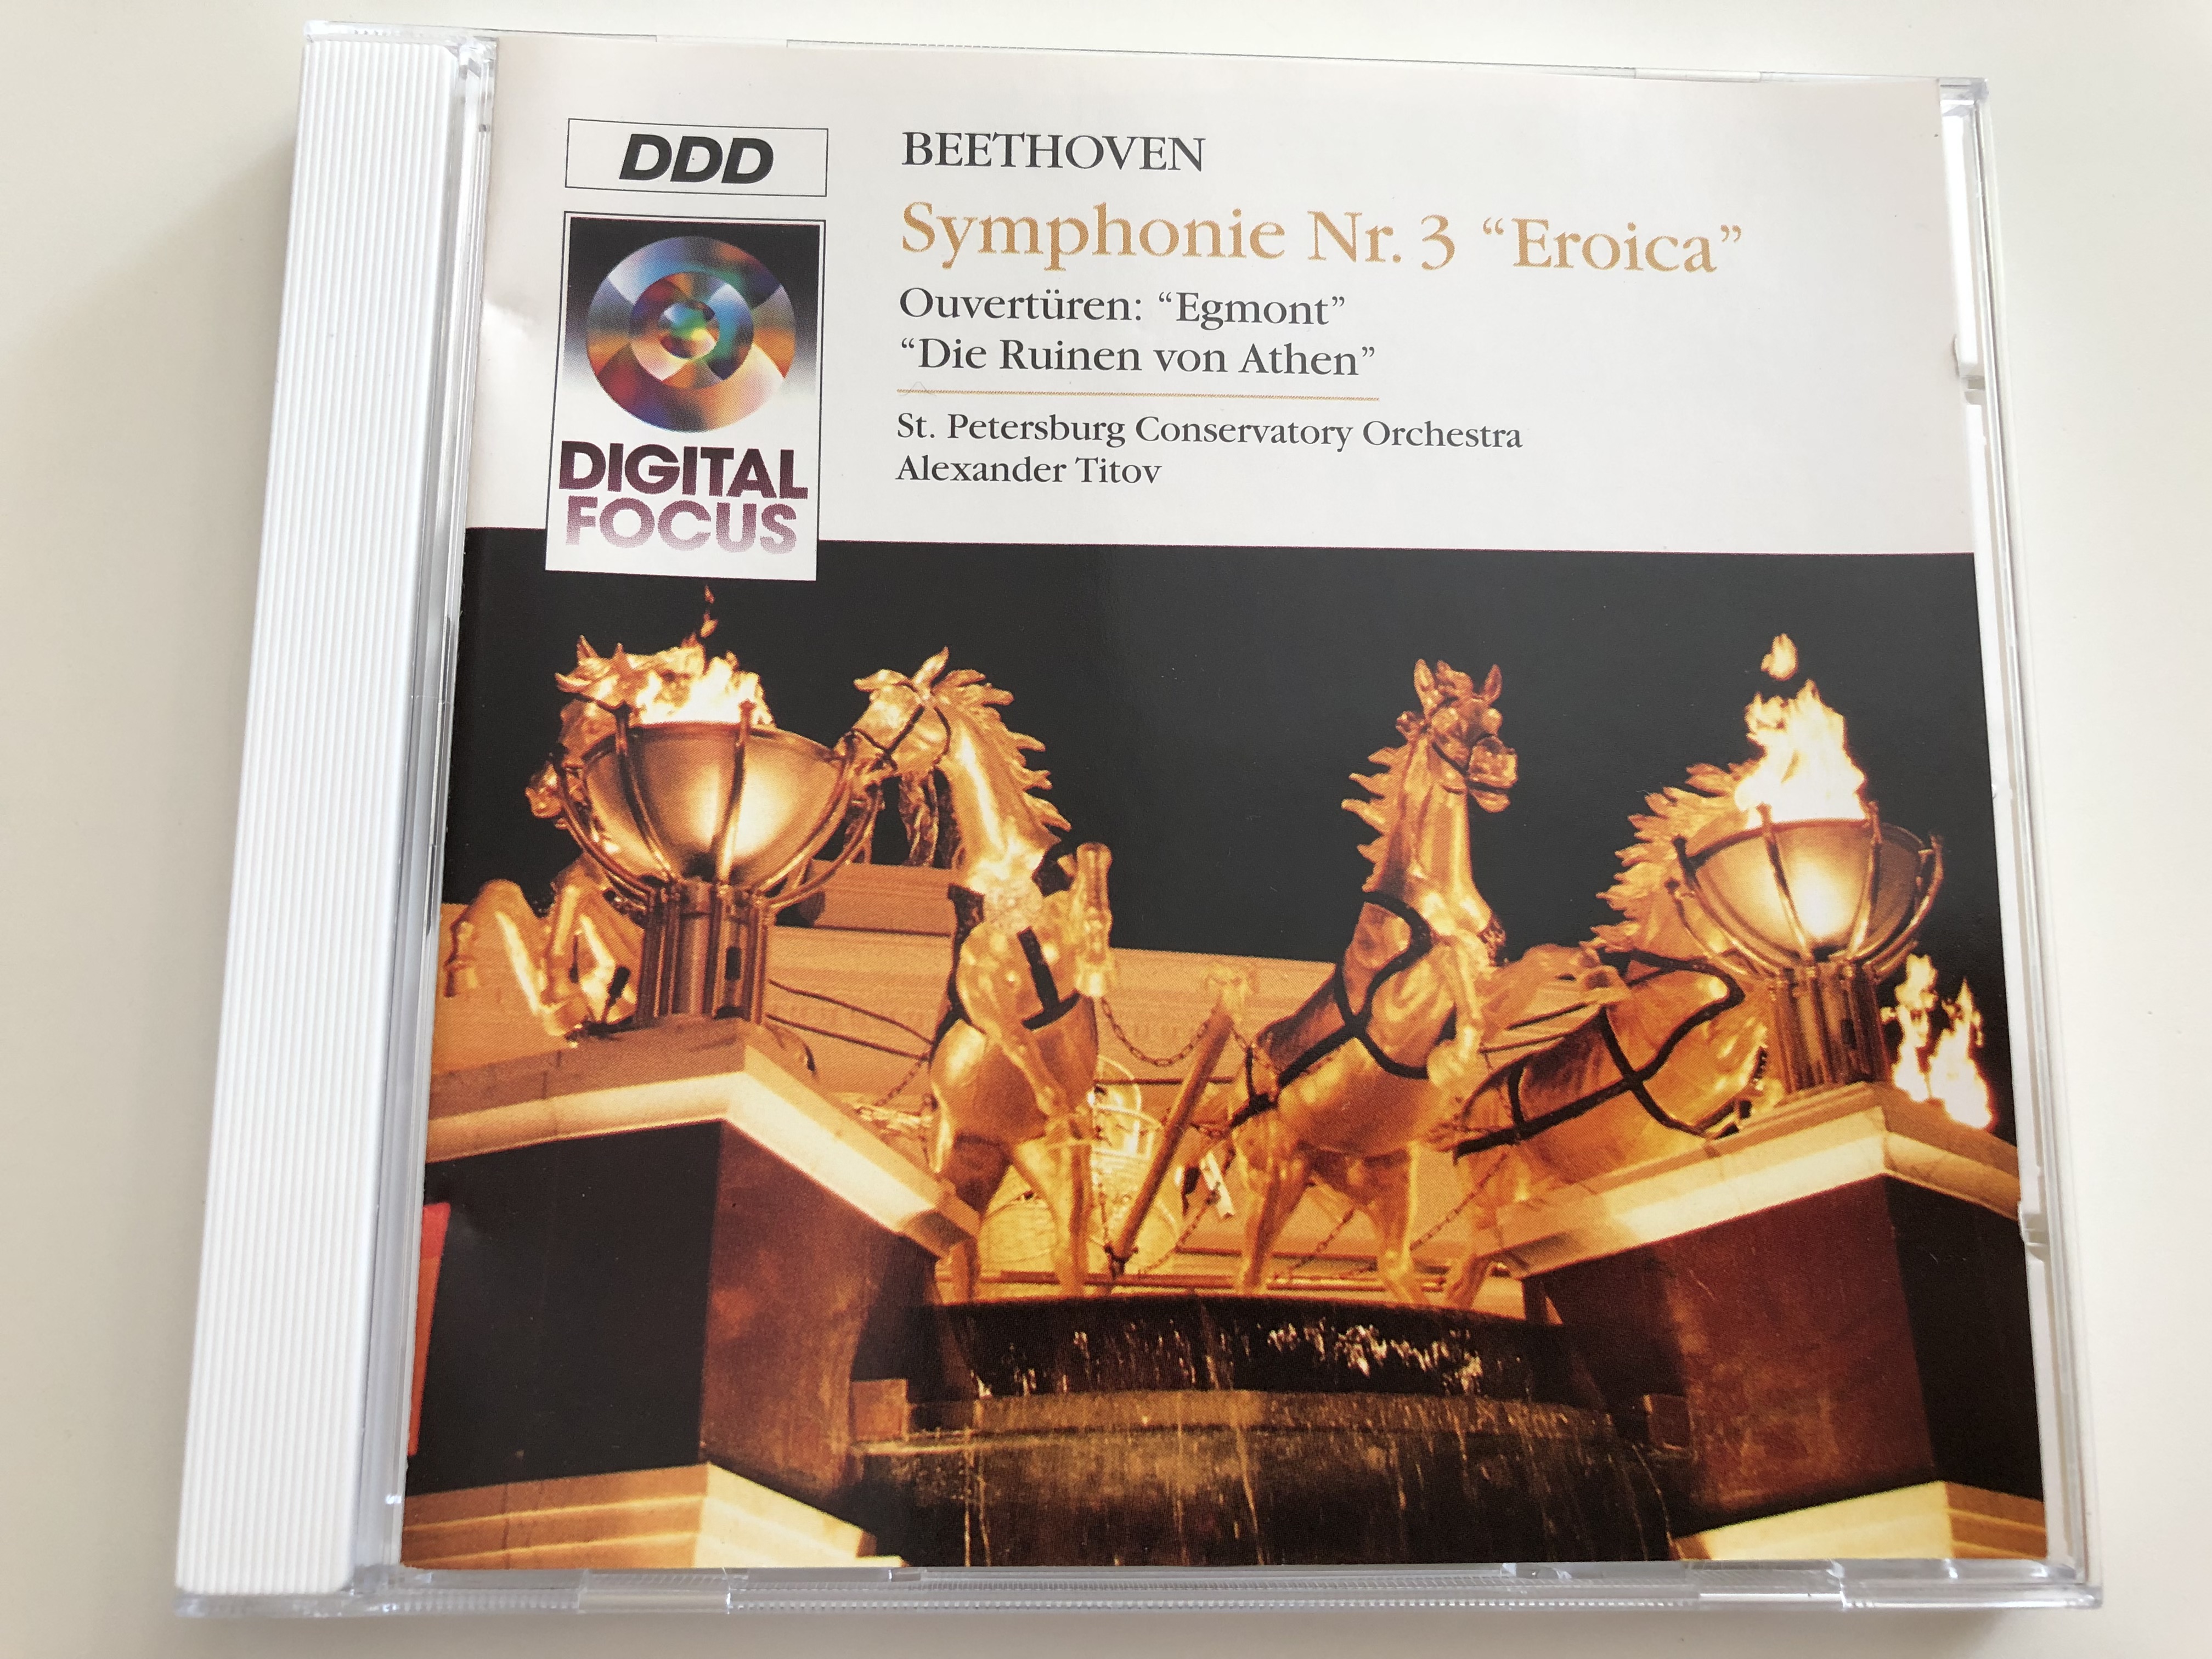 beethoven-symphonie-nr.-3-eroica-ouvert-ren-egmont-die-ruinen-von-athen-st.-petersburg-conservatory-orchestra-conducted-by-alexander-titov-new-philharmoy-orchestra-st.-petersburg-audio-cd-1993-qk-57219-1-.jpg